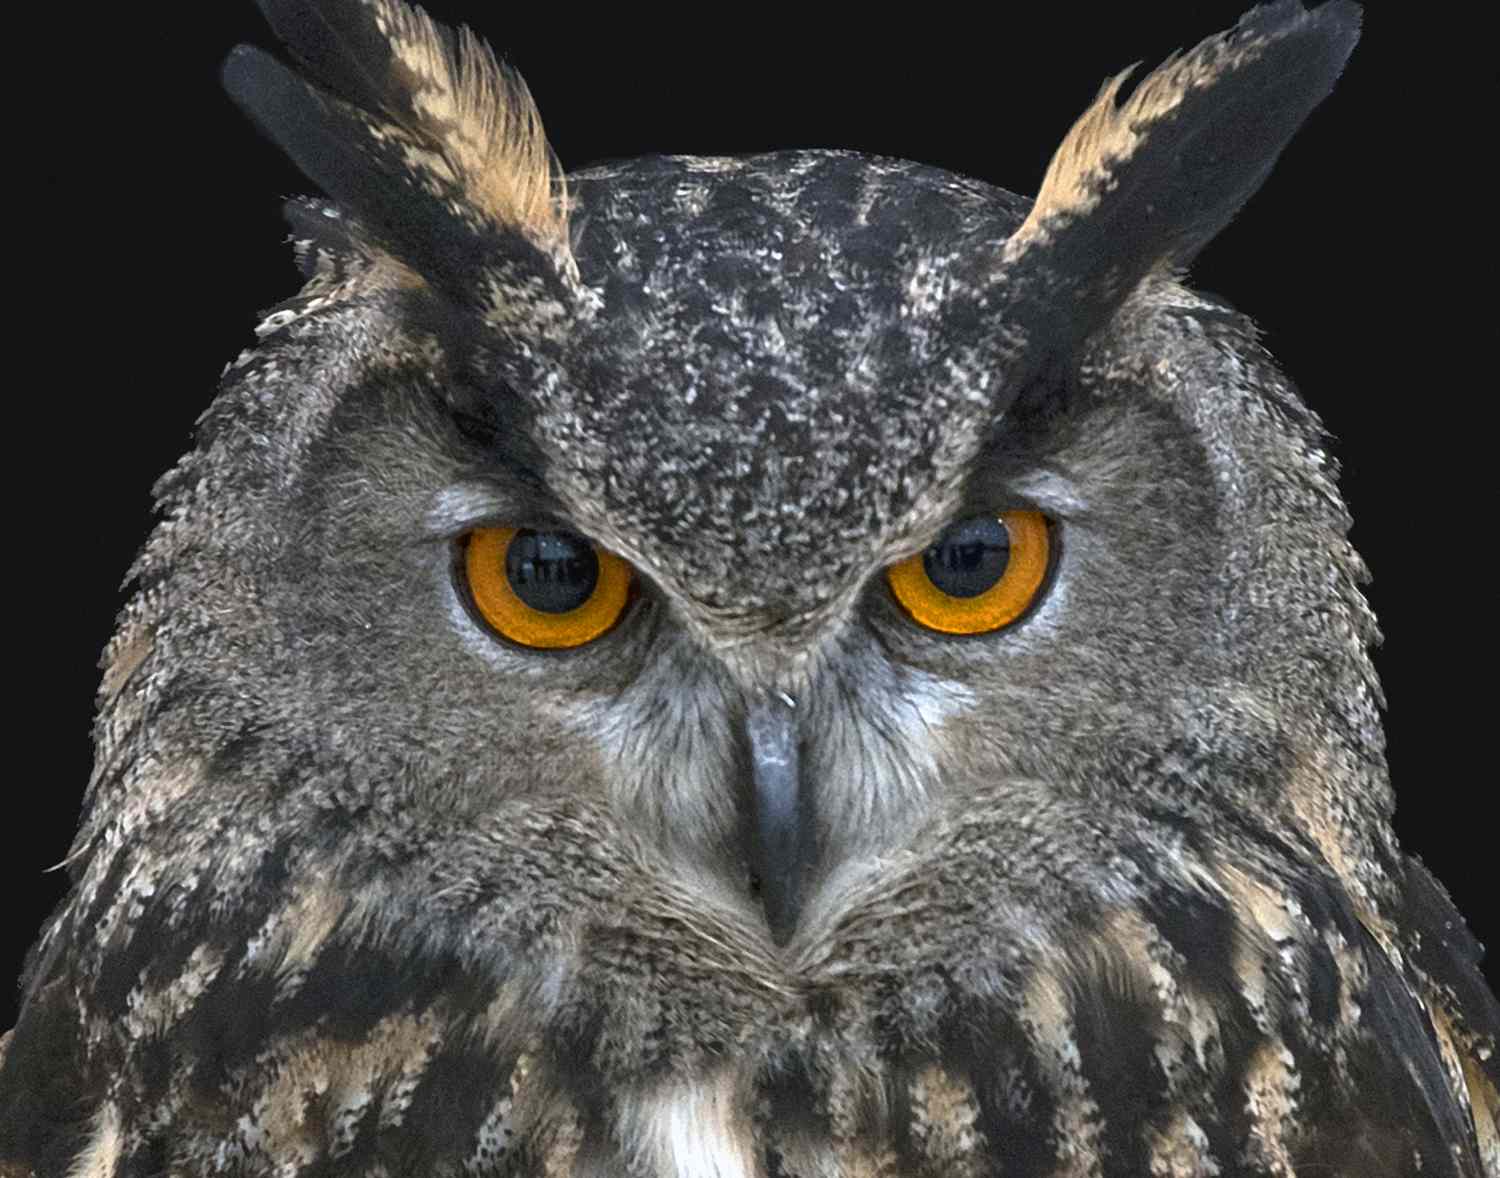 Ear tufts of an owl